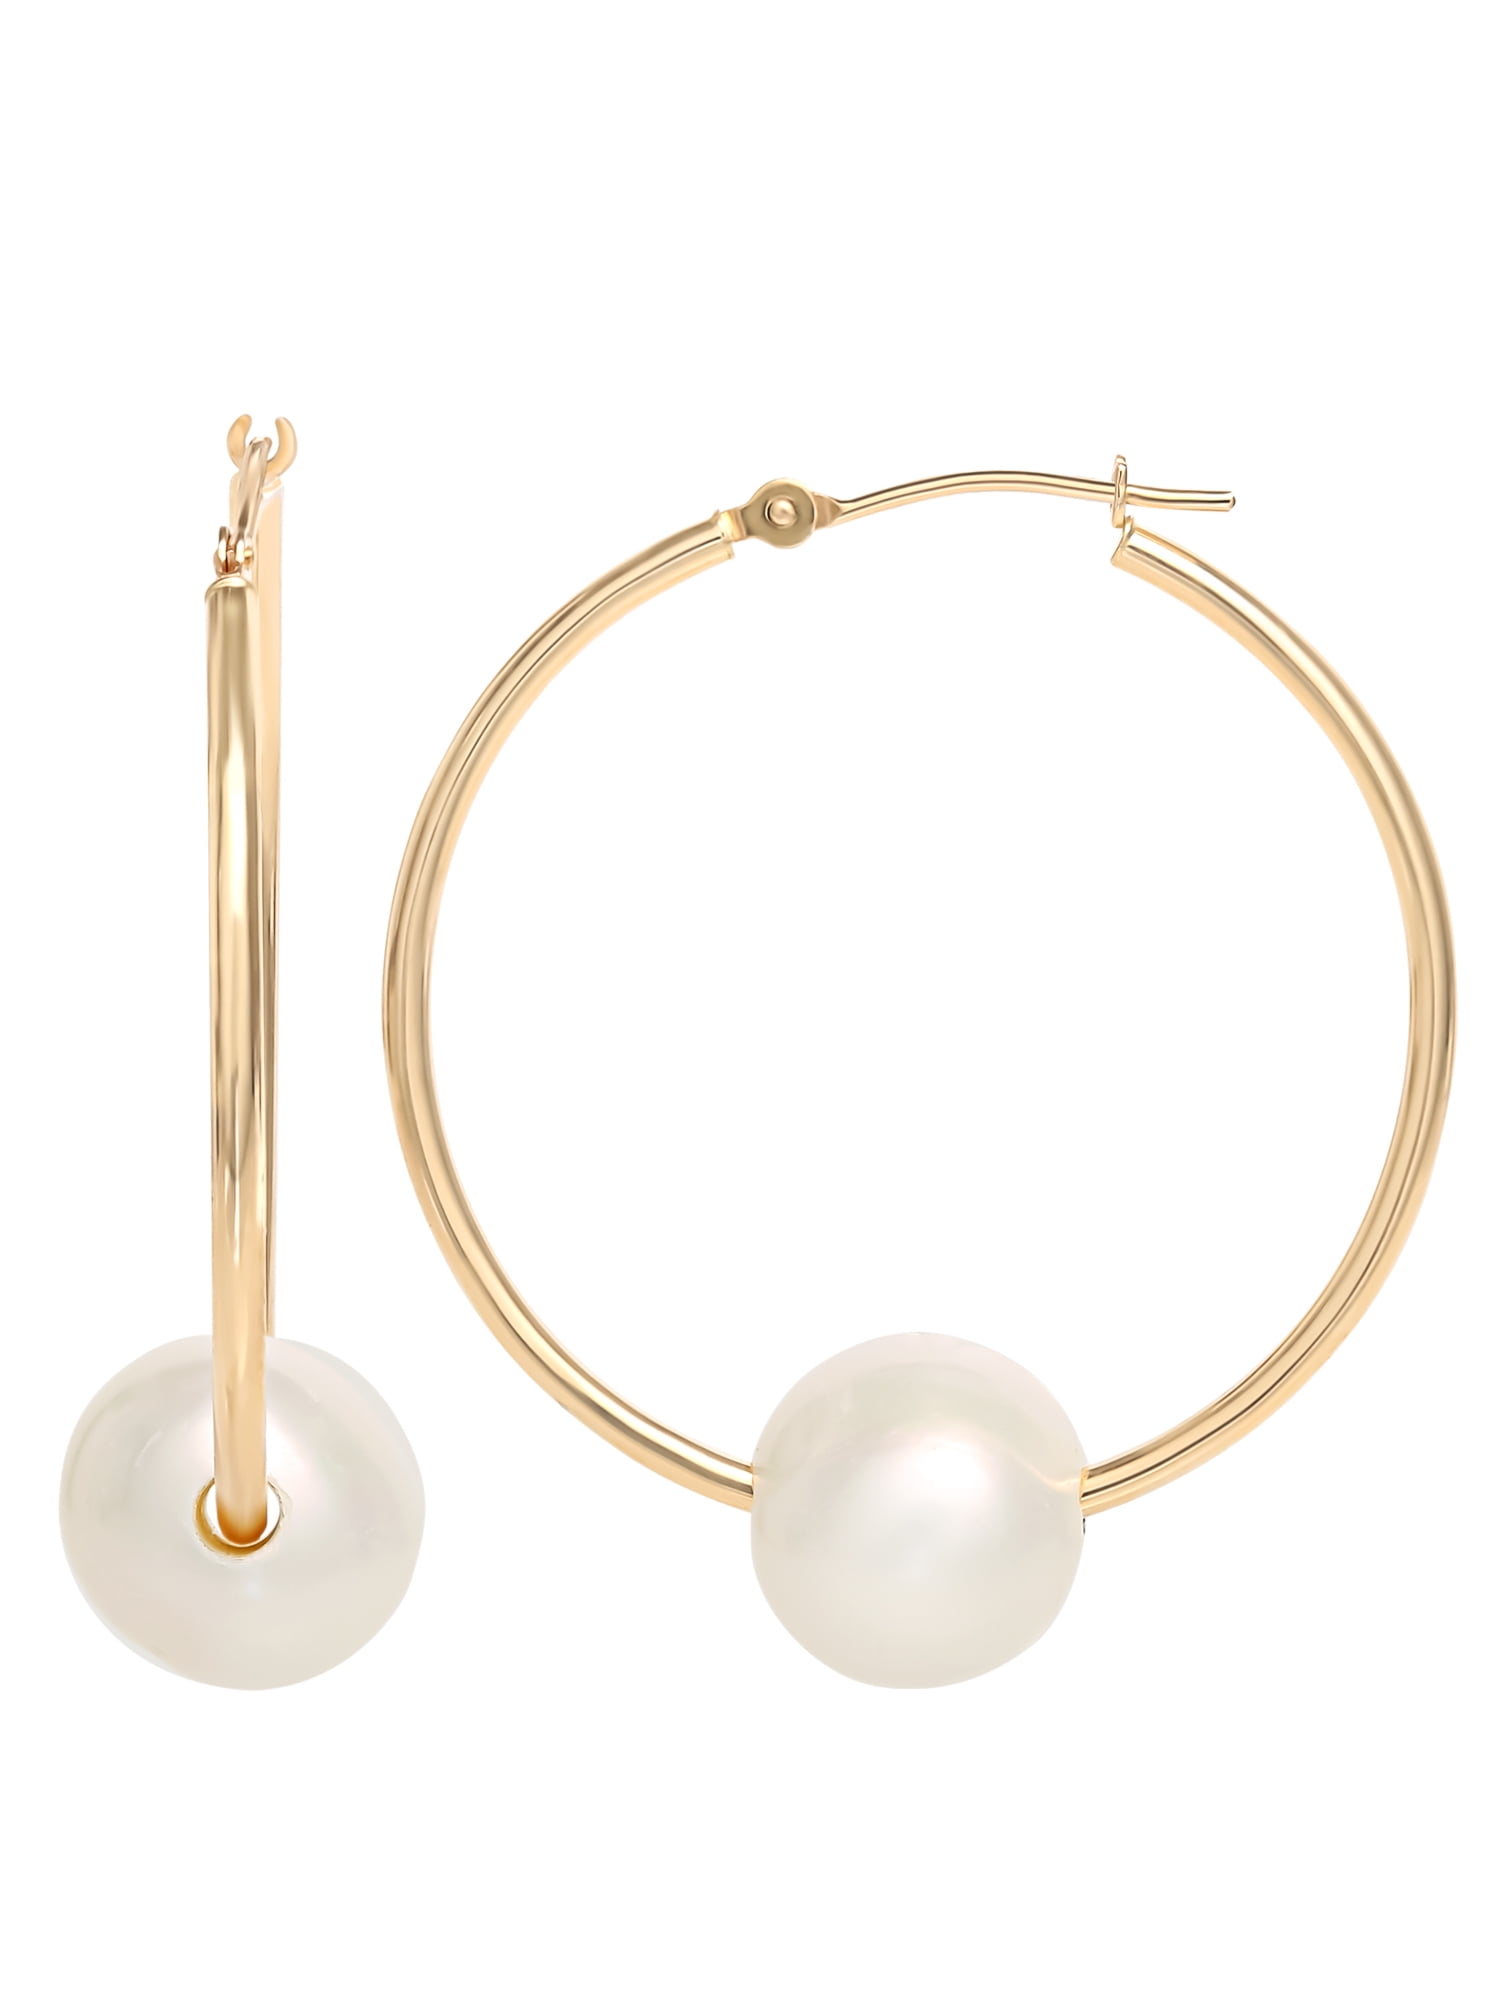 White Floating Pearl 50mm 14K Gold Filled Hoop Earrings - Jean Joaillerie